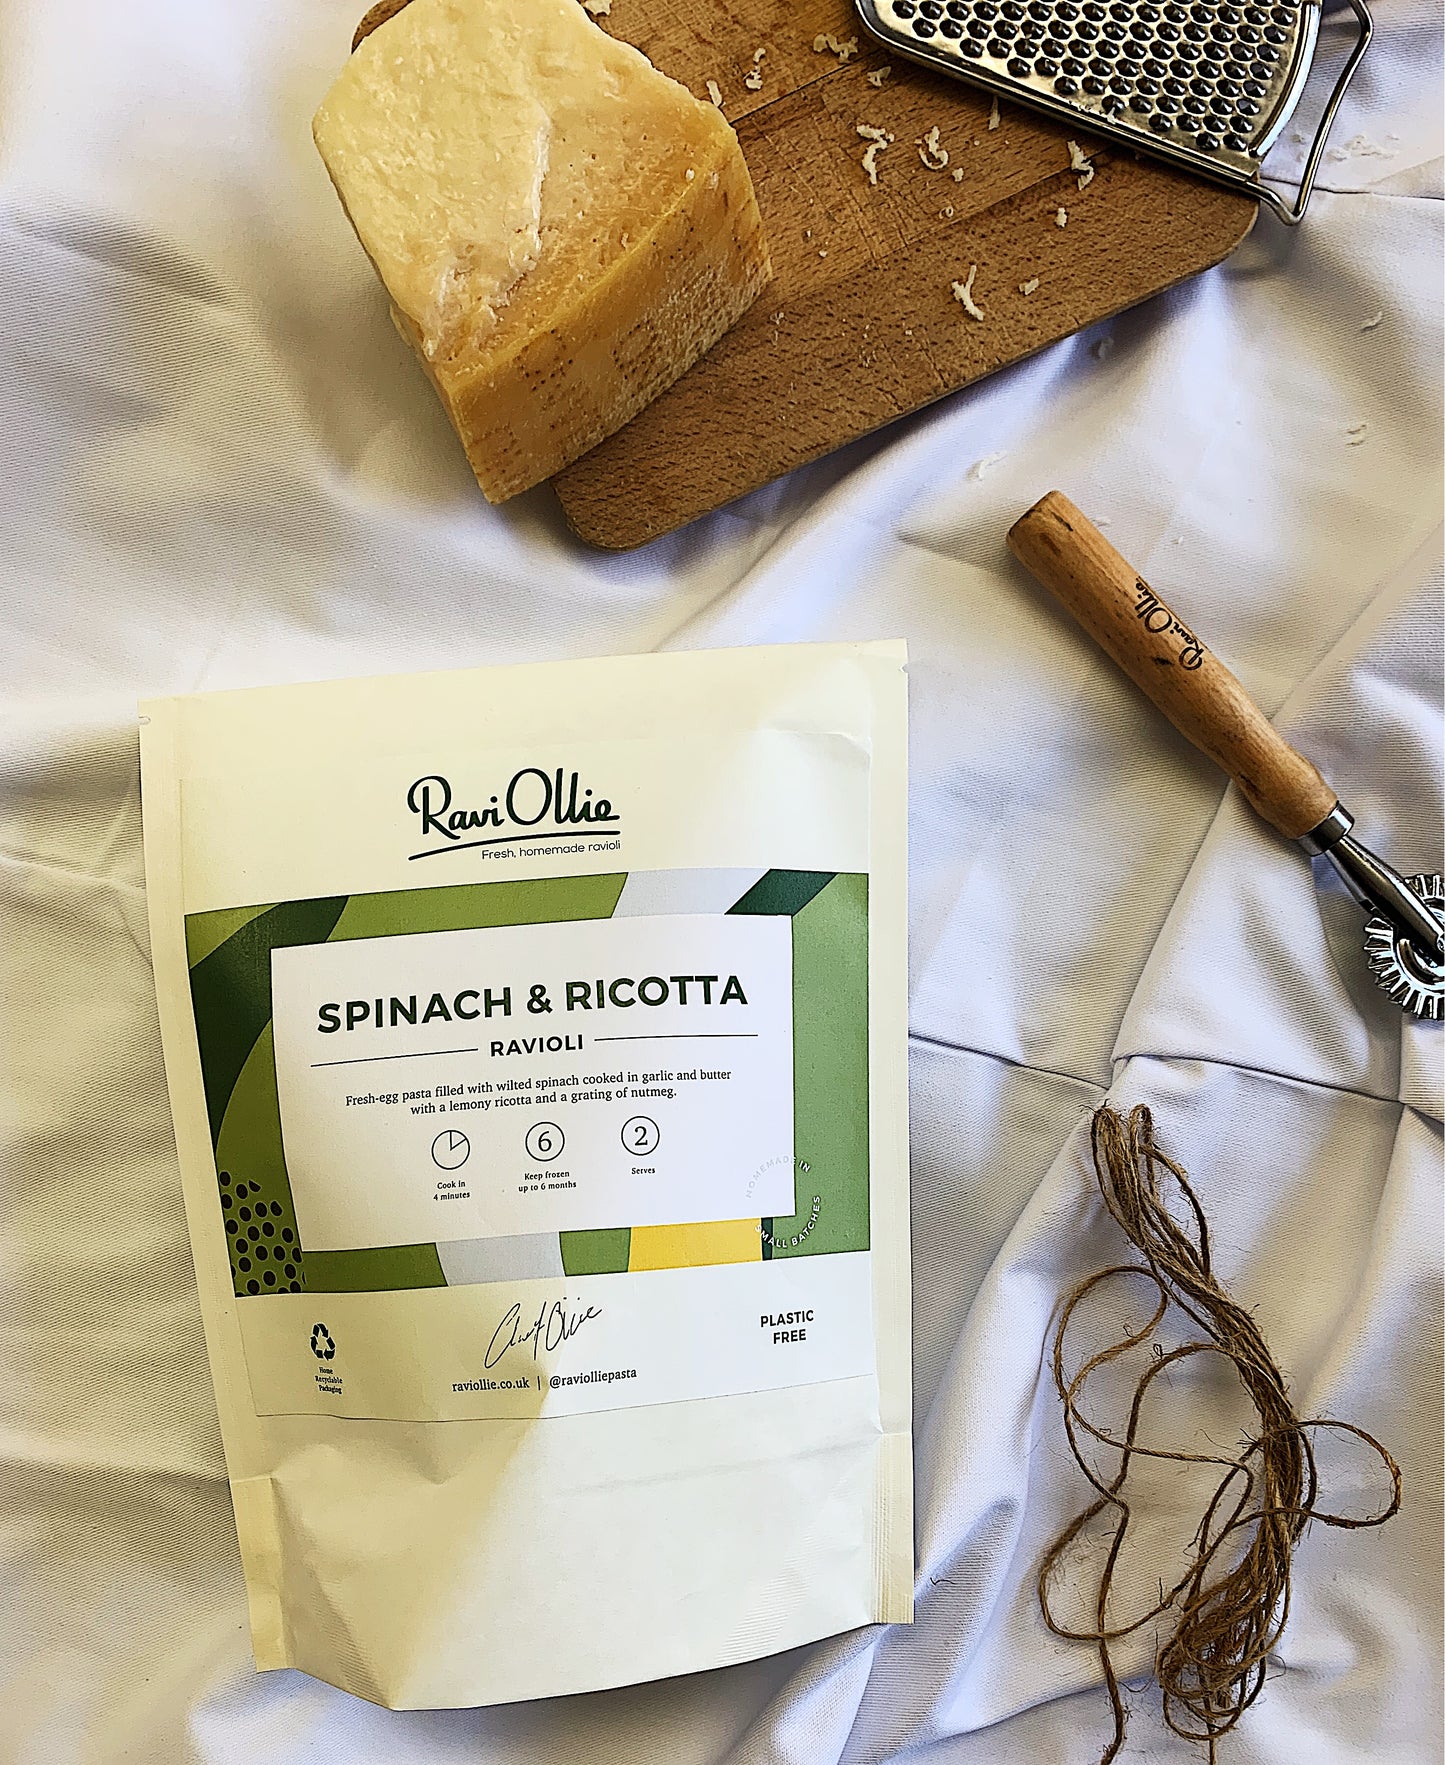 Spinach & Ricotta Ravioli (400g)